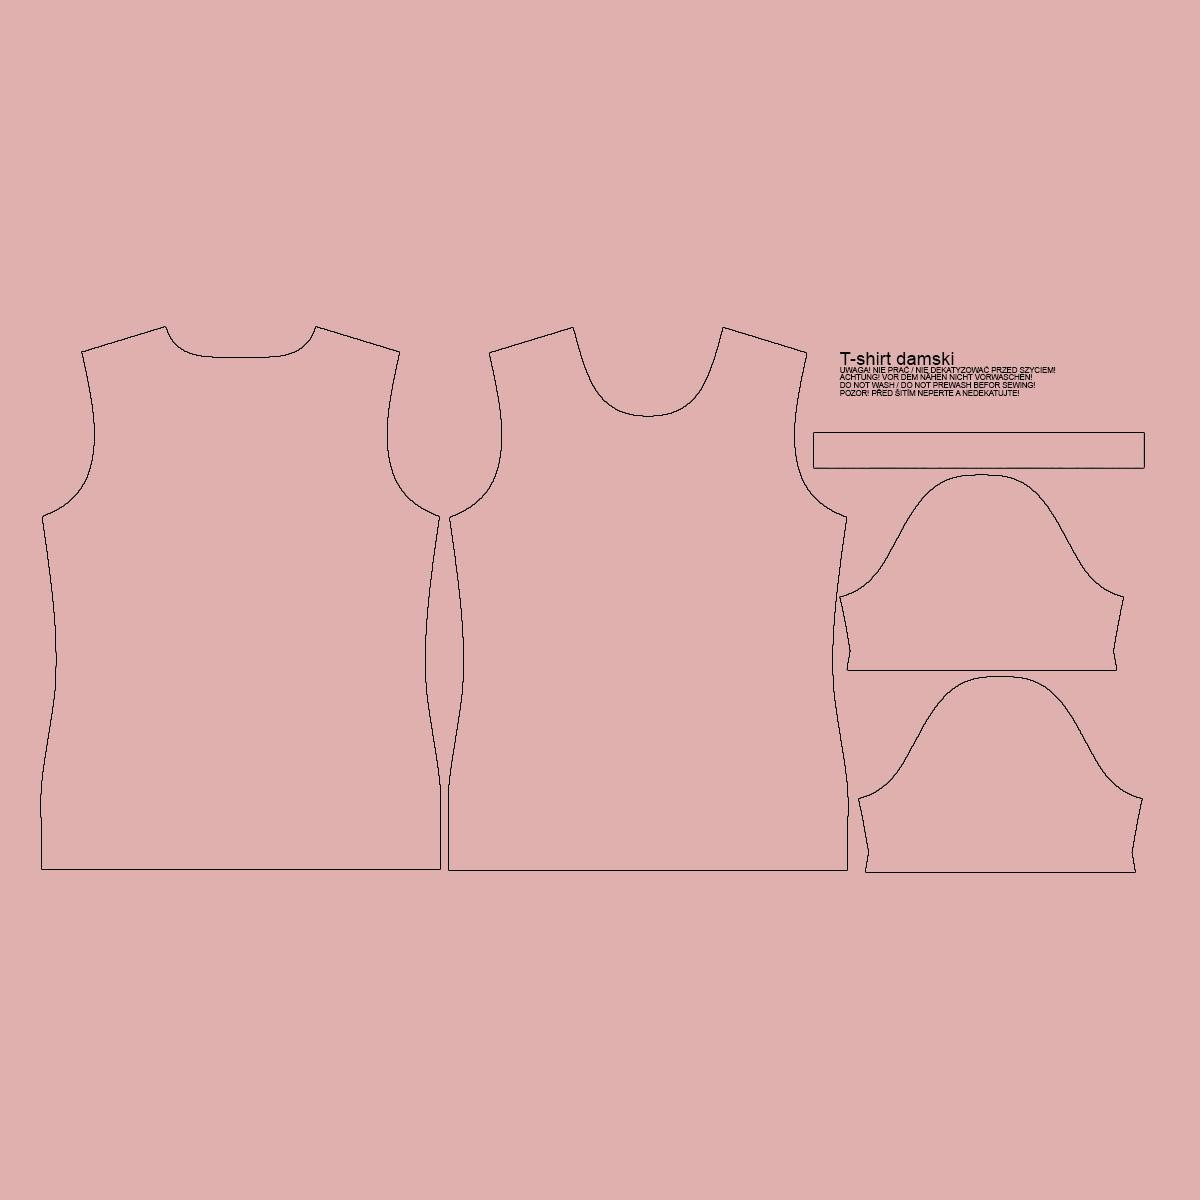 T-SHIRT DAMSKI - B-05 - ROSE QUARTZ / róż kwarcowy - single jersey